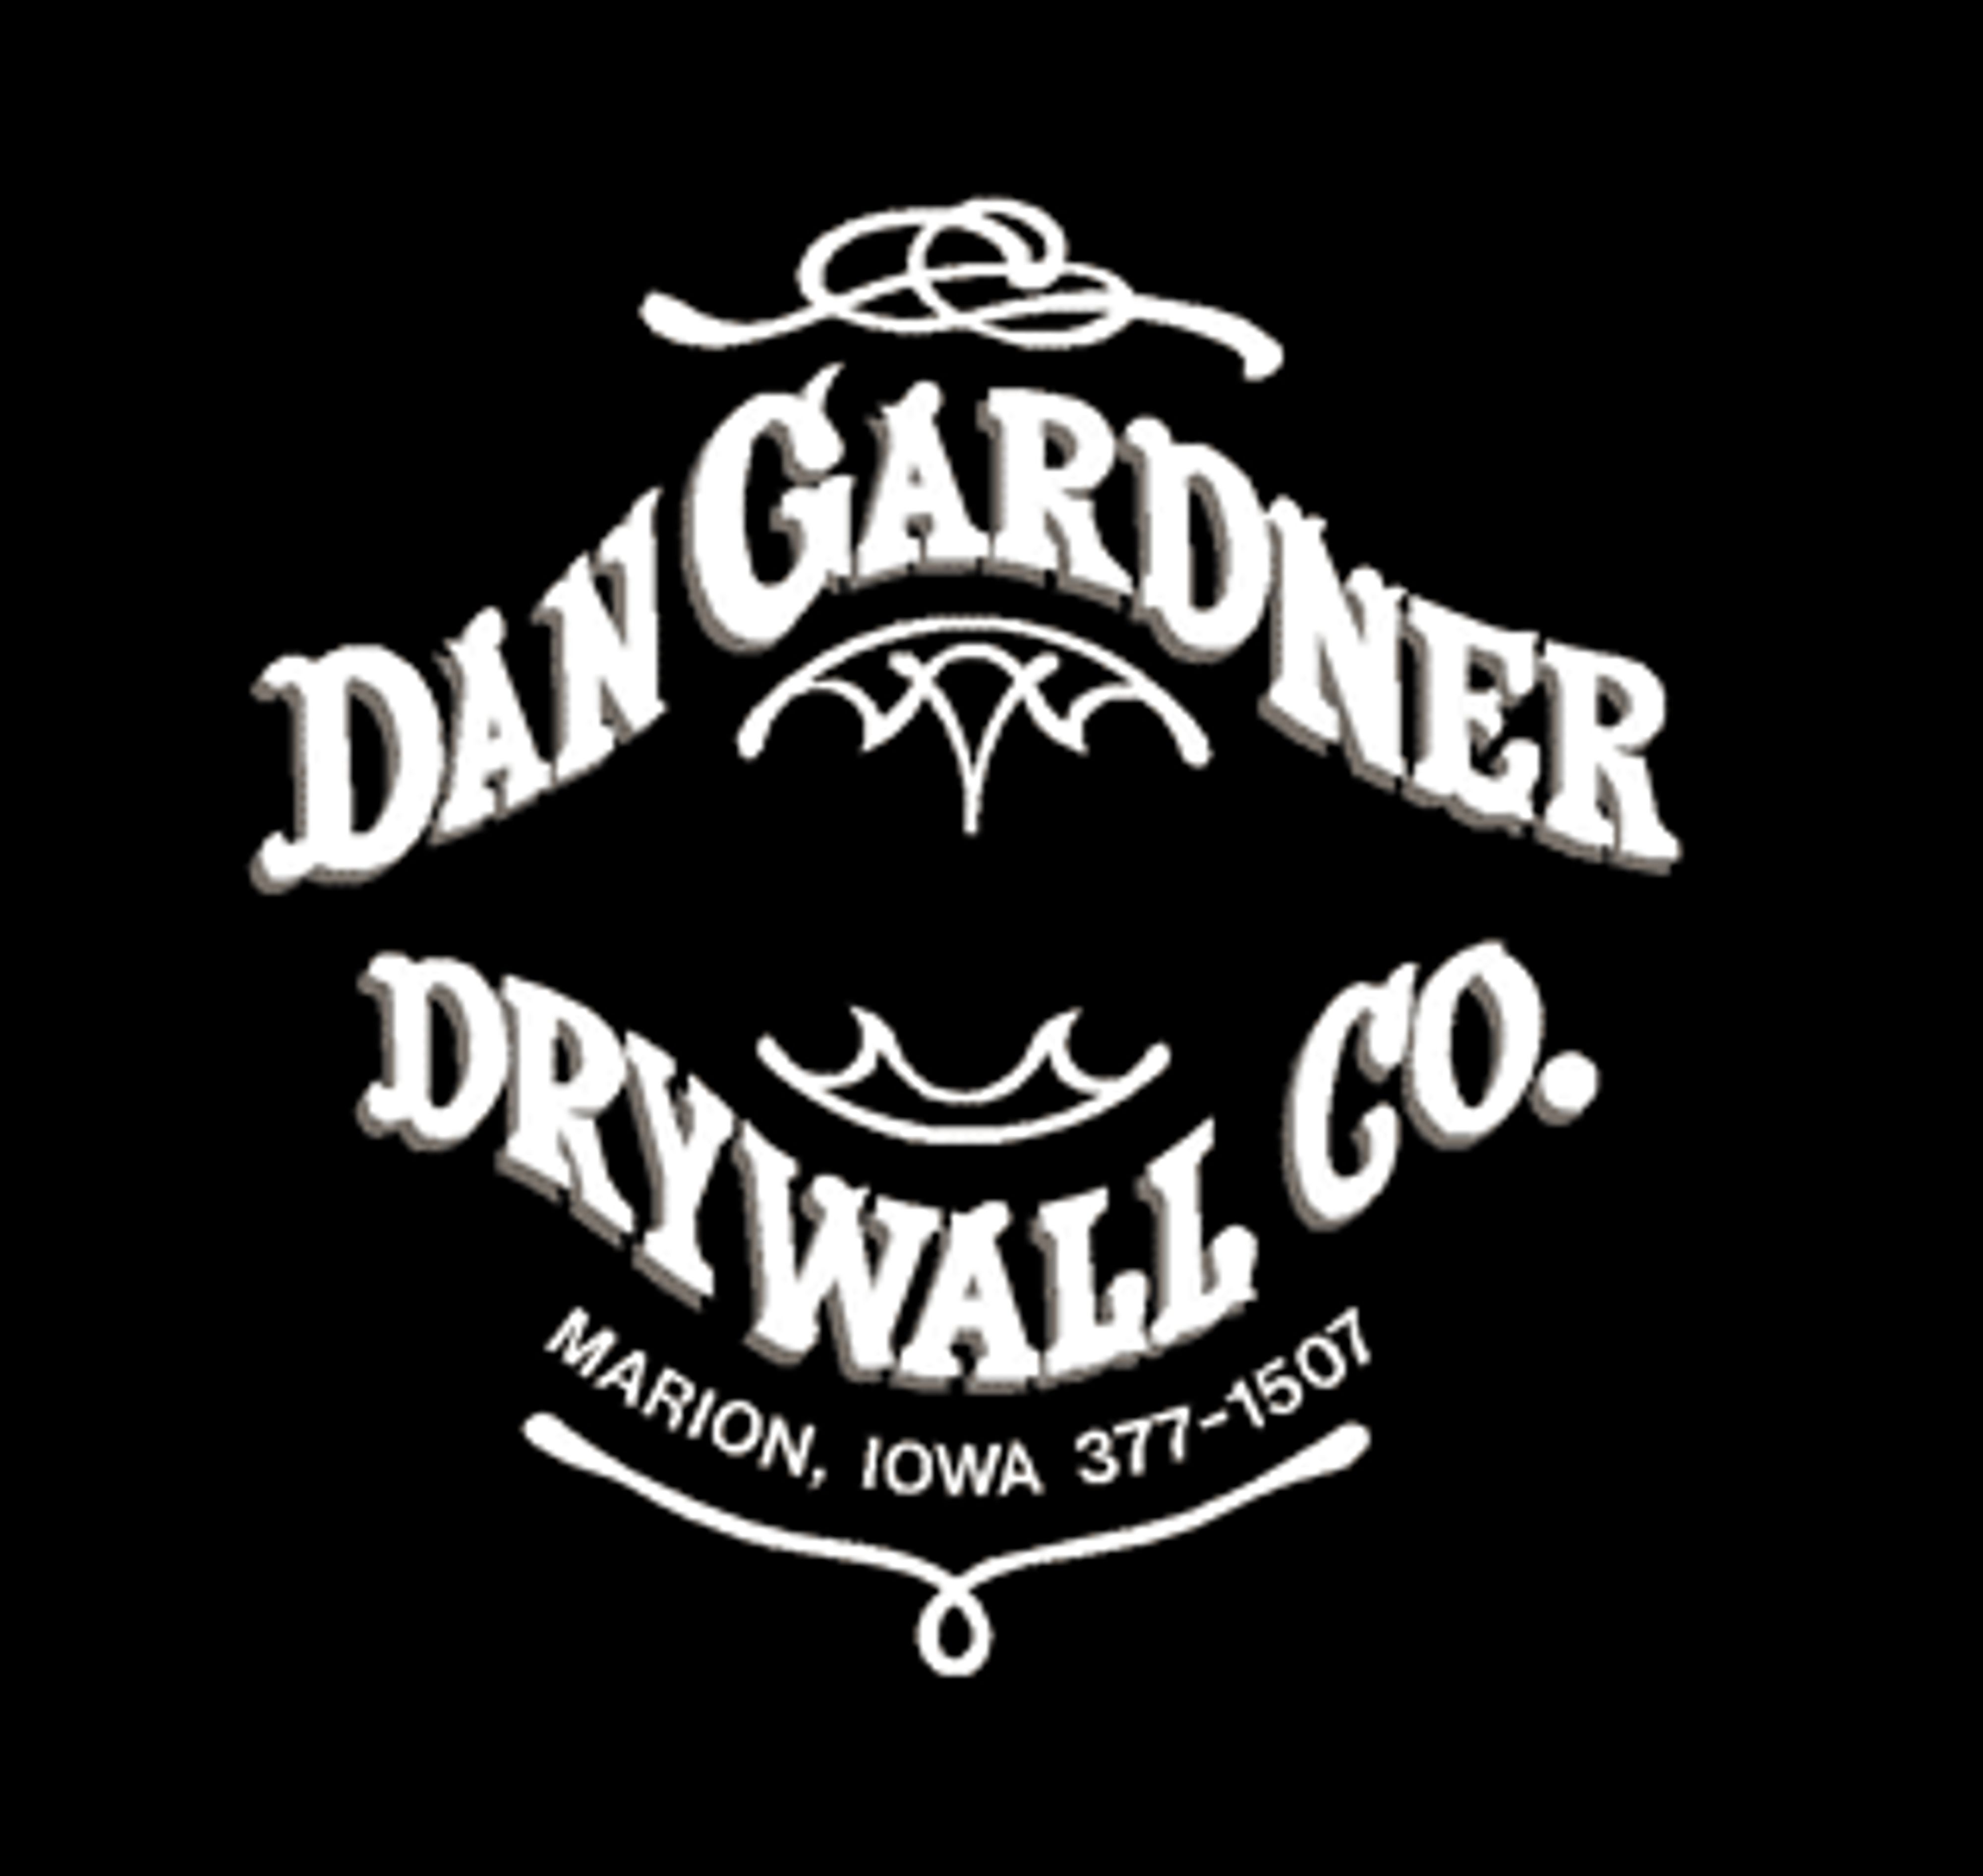 Company logo of Dan Gardner Drywall CO